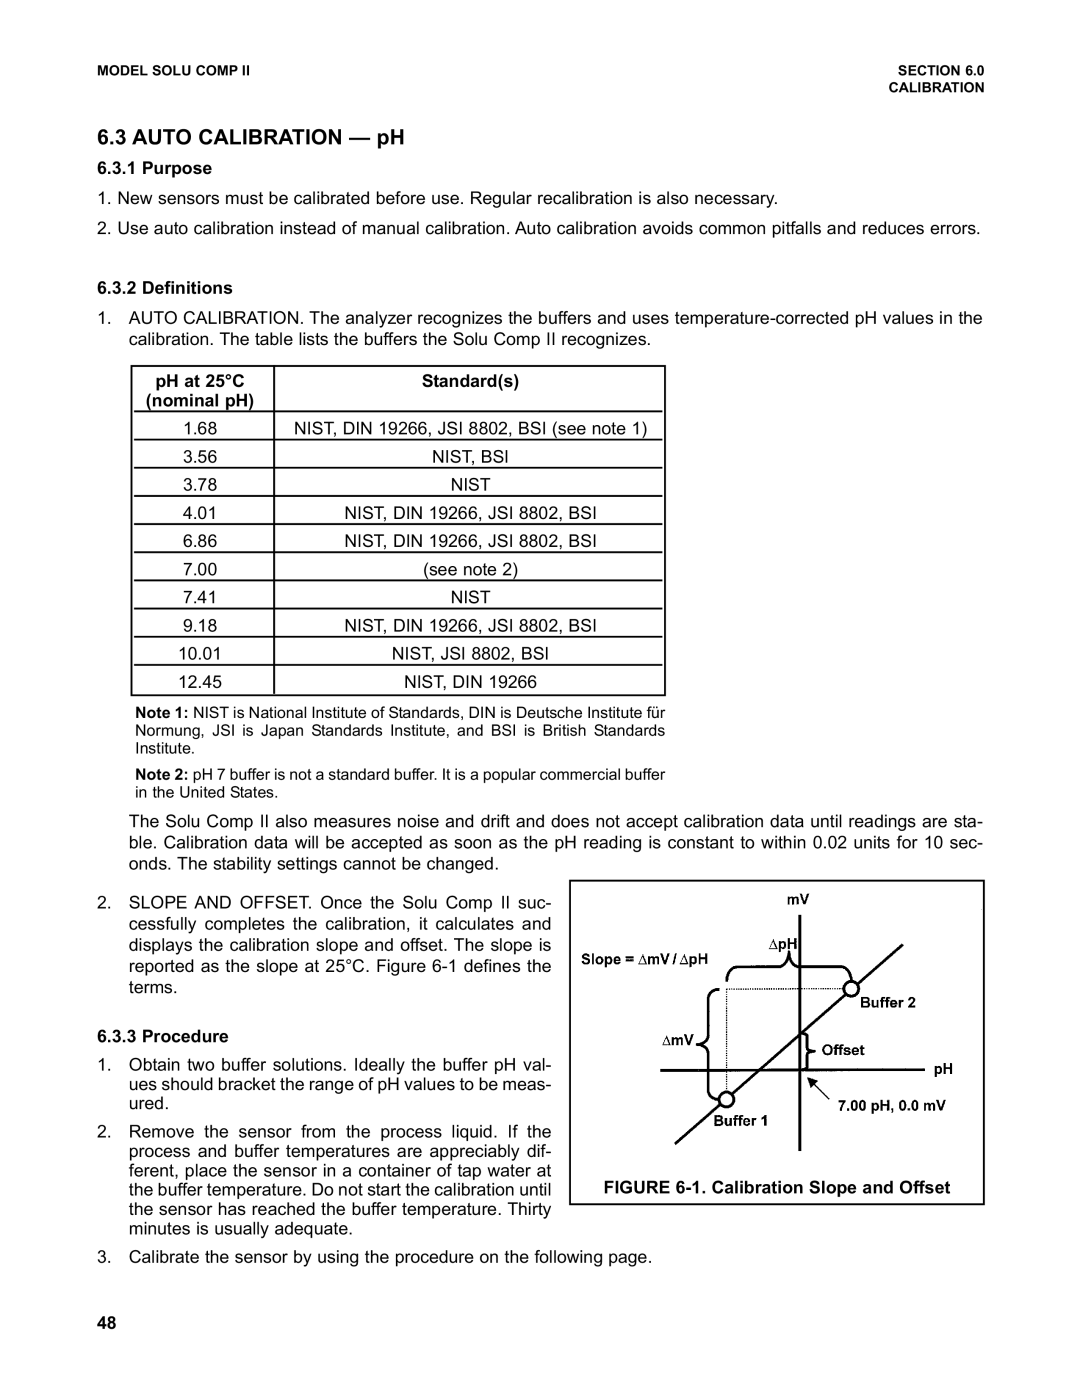 Emerson PN 51-1055pHC/rev.K instruction manual PH at 25C Standards Nominal pH, Calibration Slope and Offset 